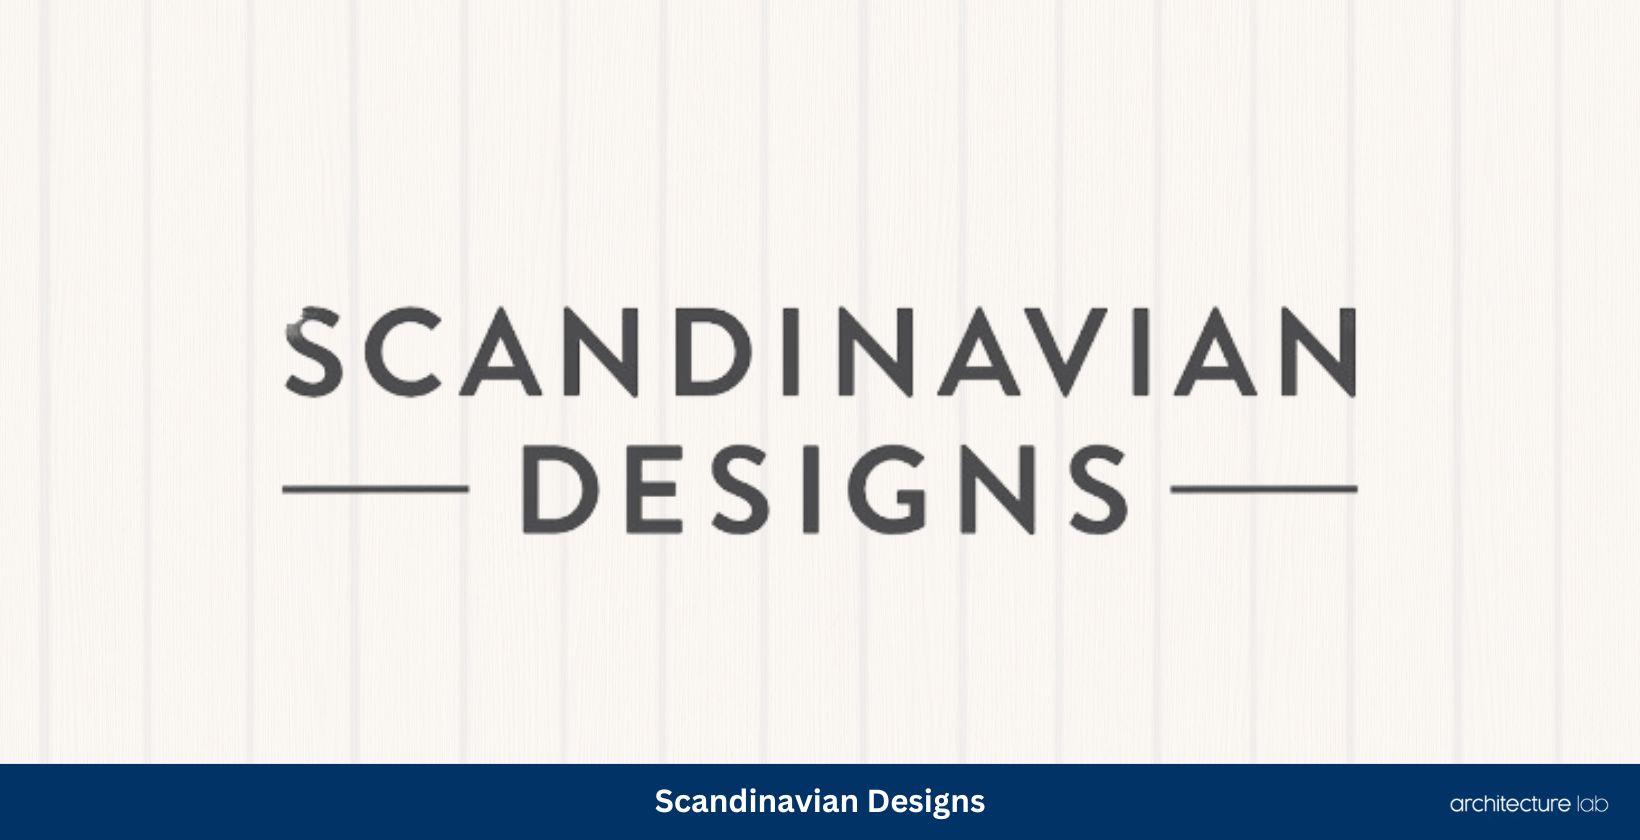 Scandinavian designs 1